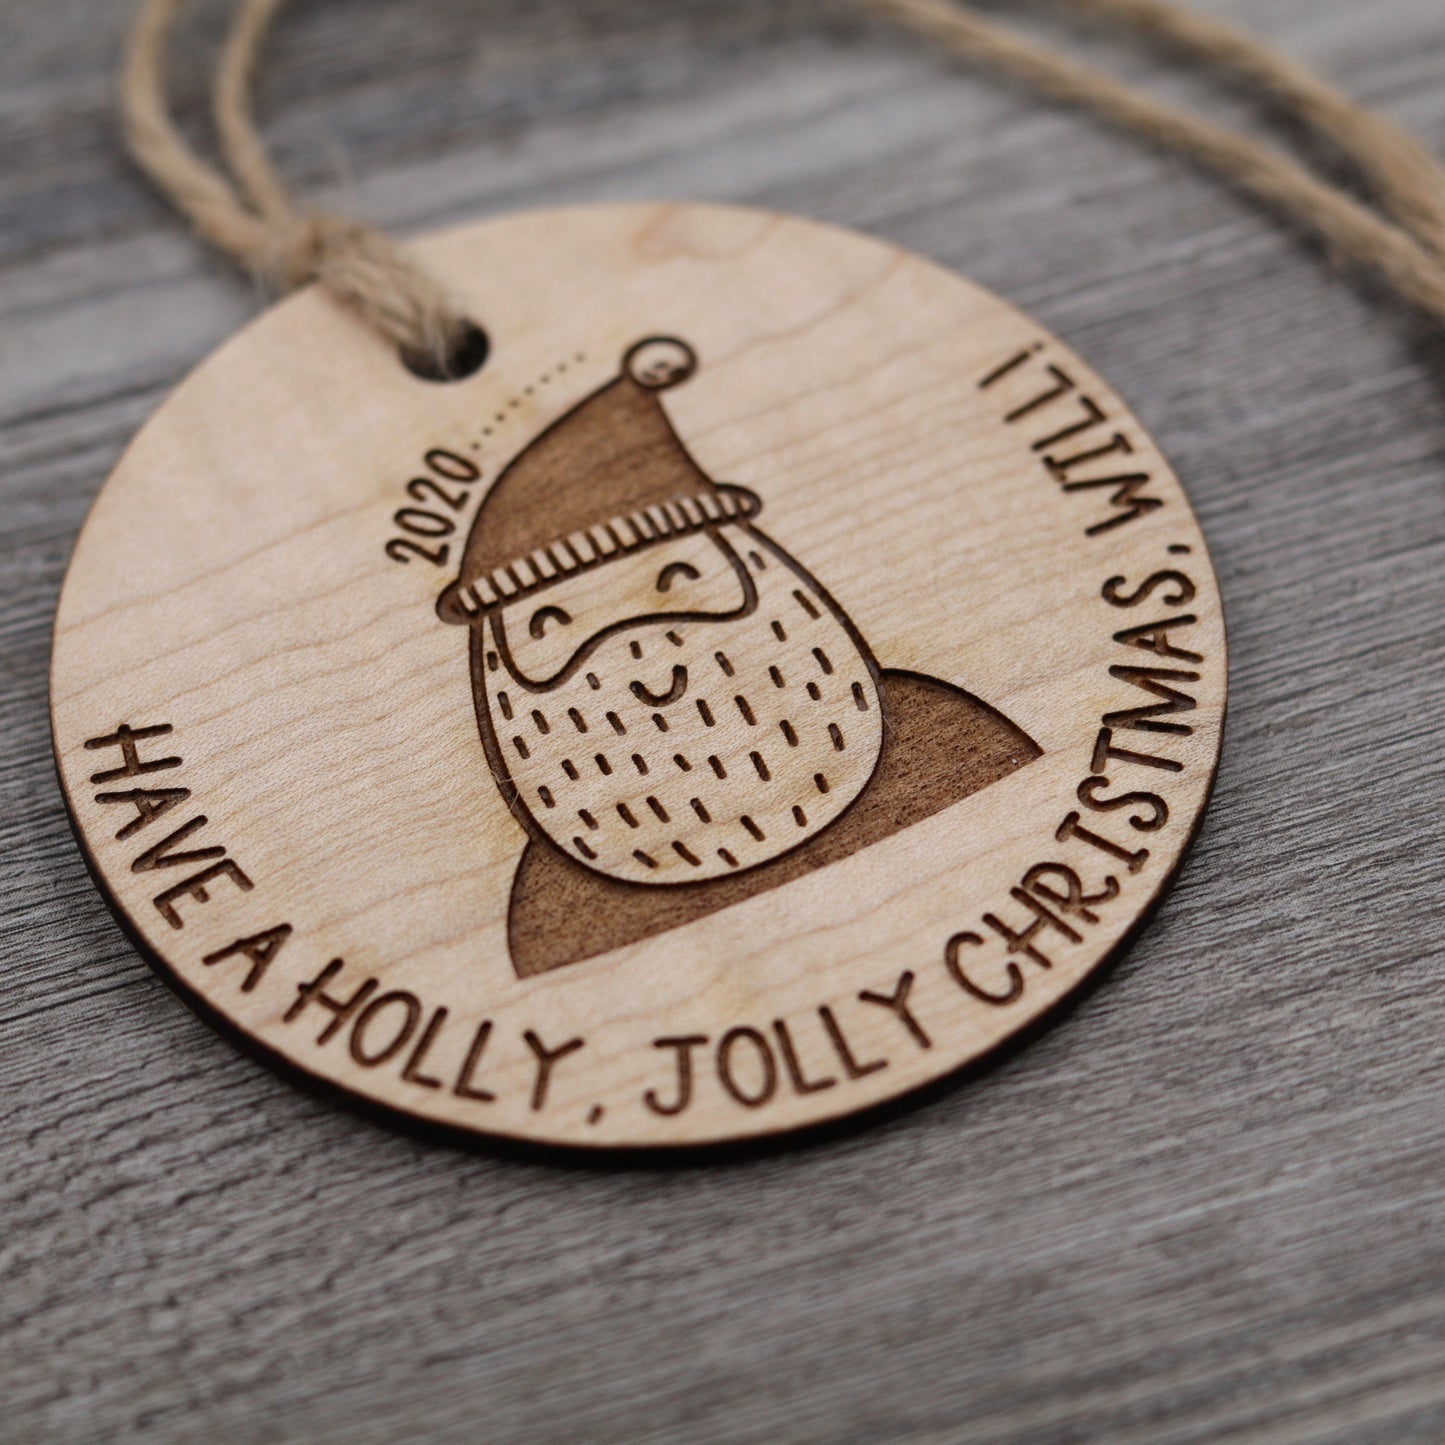 Holly, Jolly Christmas Santa Ornament